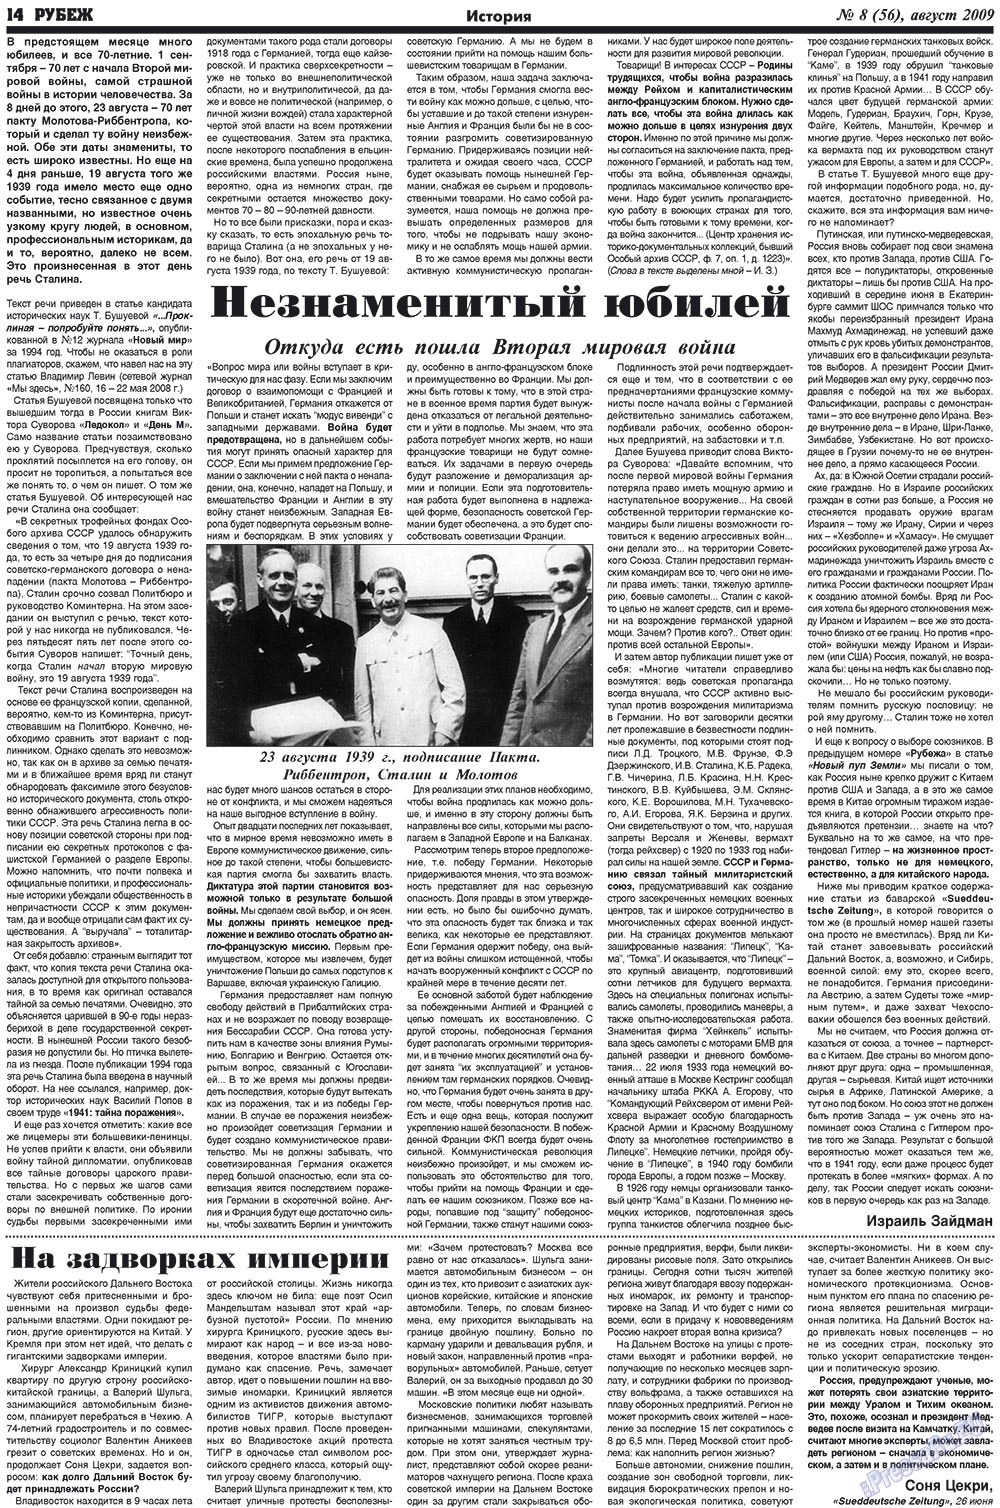 Рубеж, газета. 2009 №8 стр.14